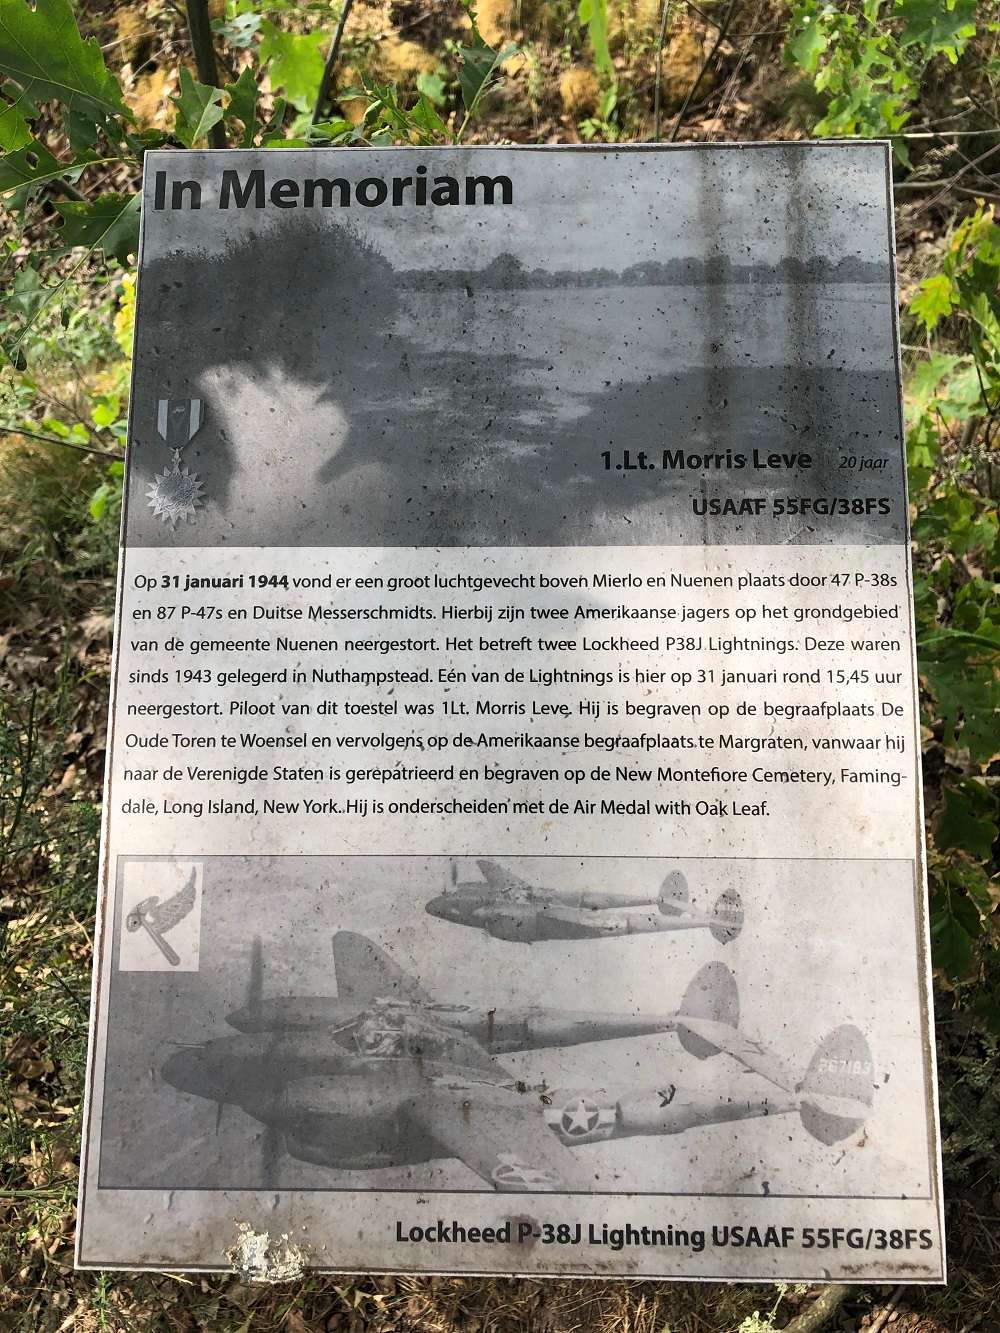 In Memoriam: Crash Site P-38 Lightning Lt. Morris Long live #2